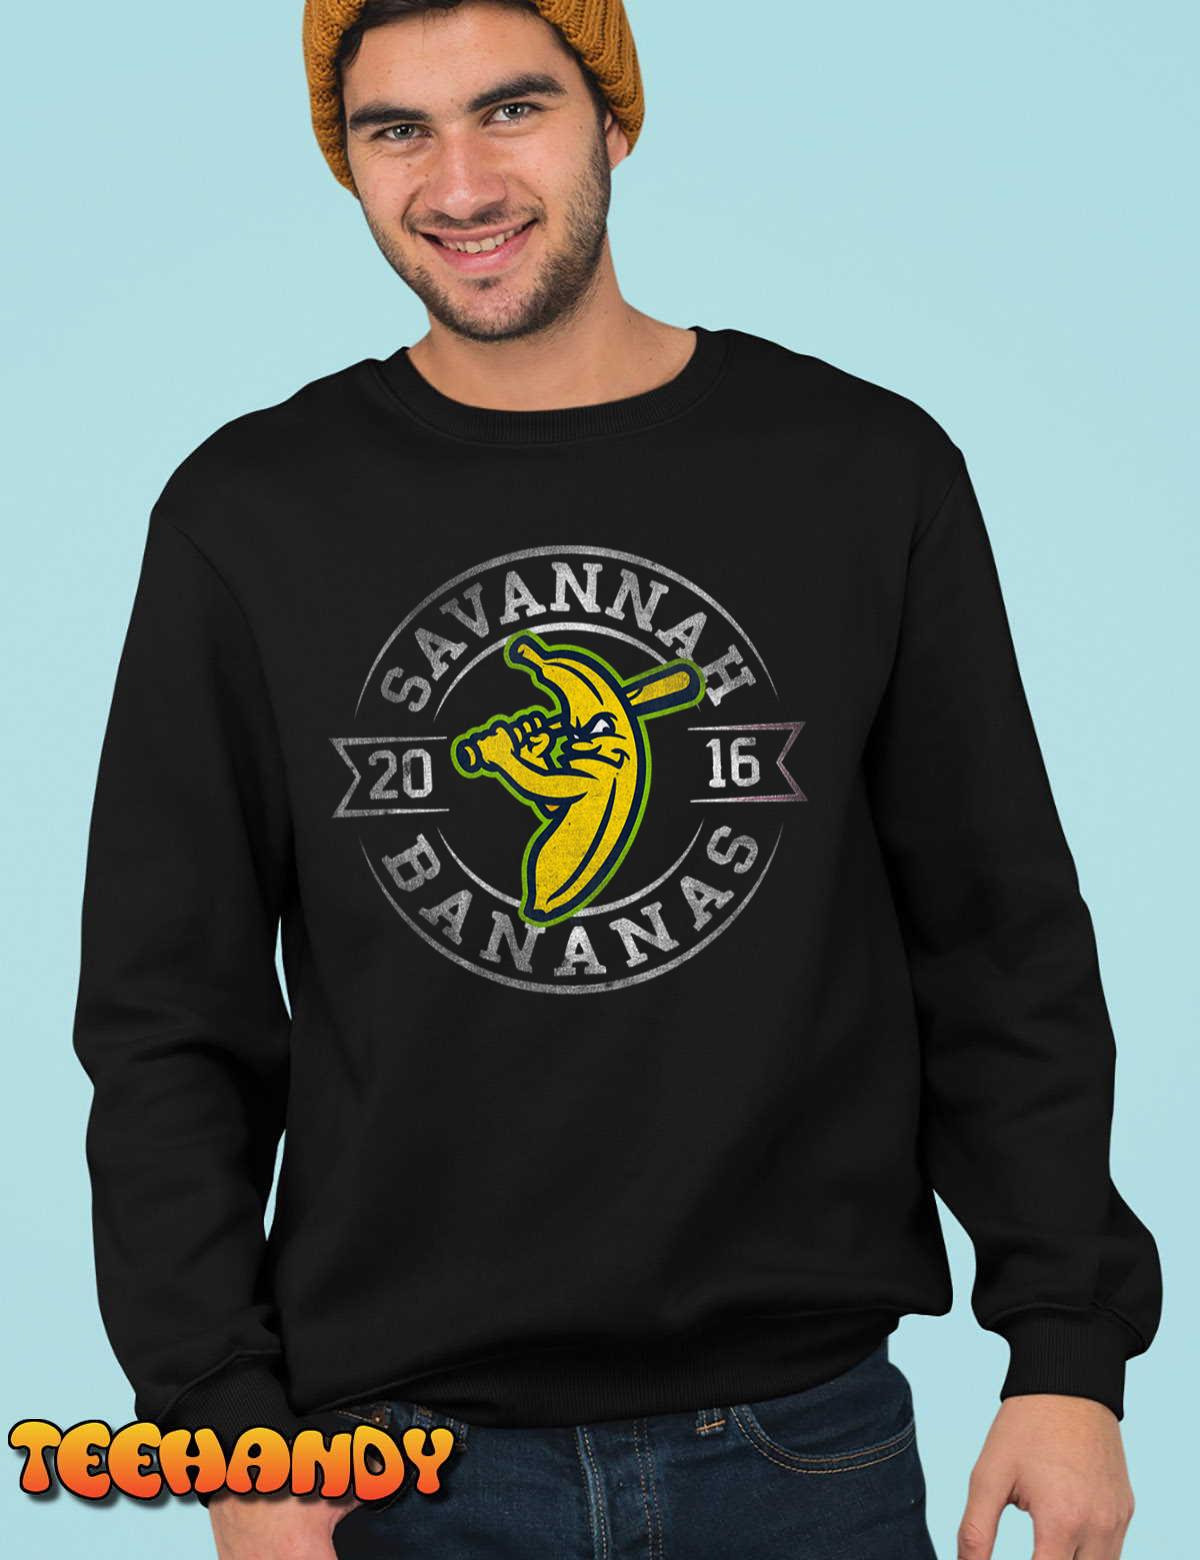 Savannah Bananas Vintage 2016 Logo Officially Licensed T-Shirt